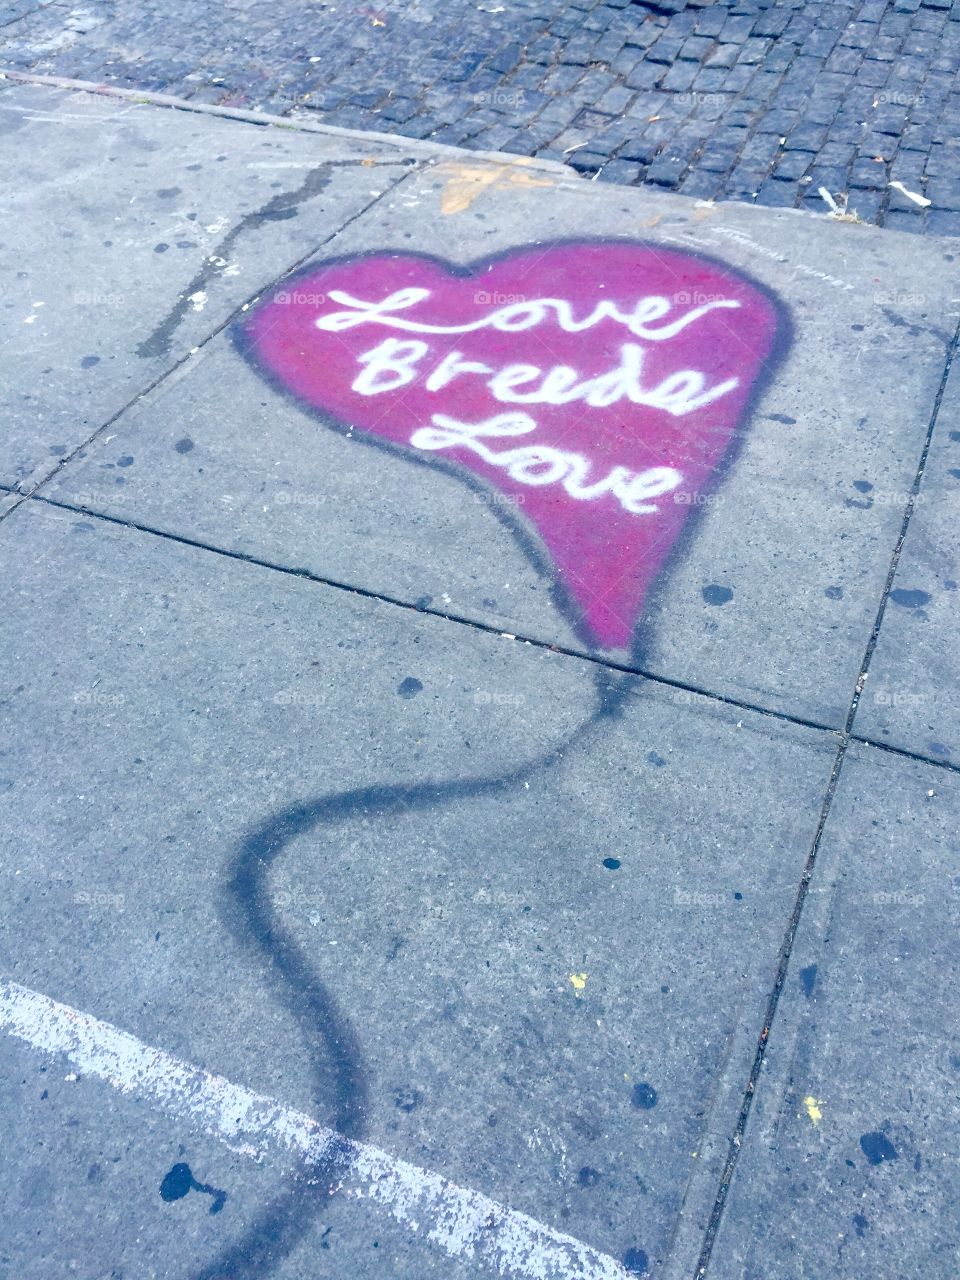 Love breeds love graffiti on sidewalk in NYC 